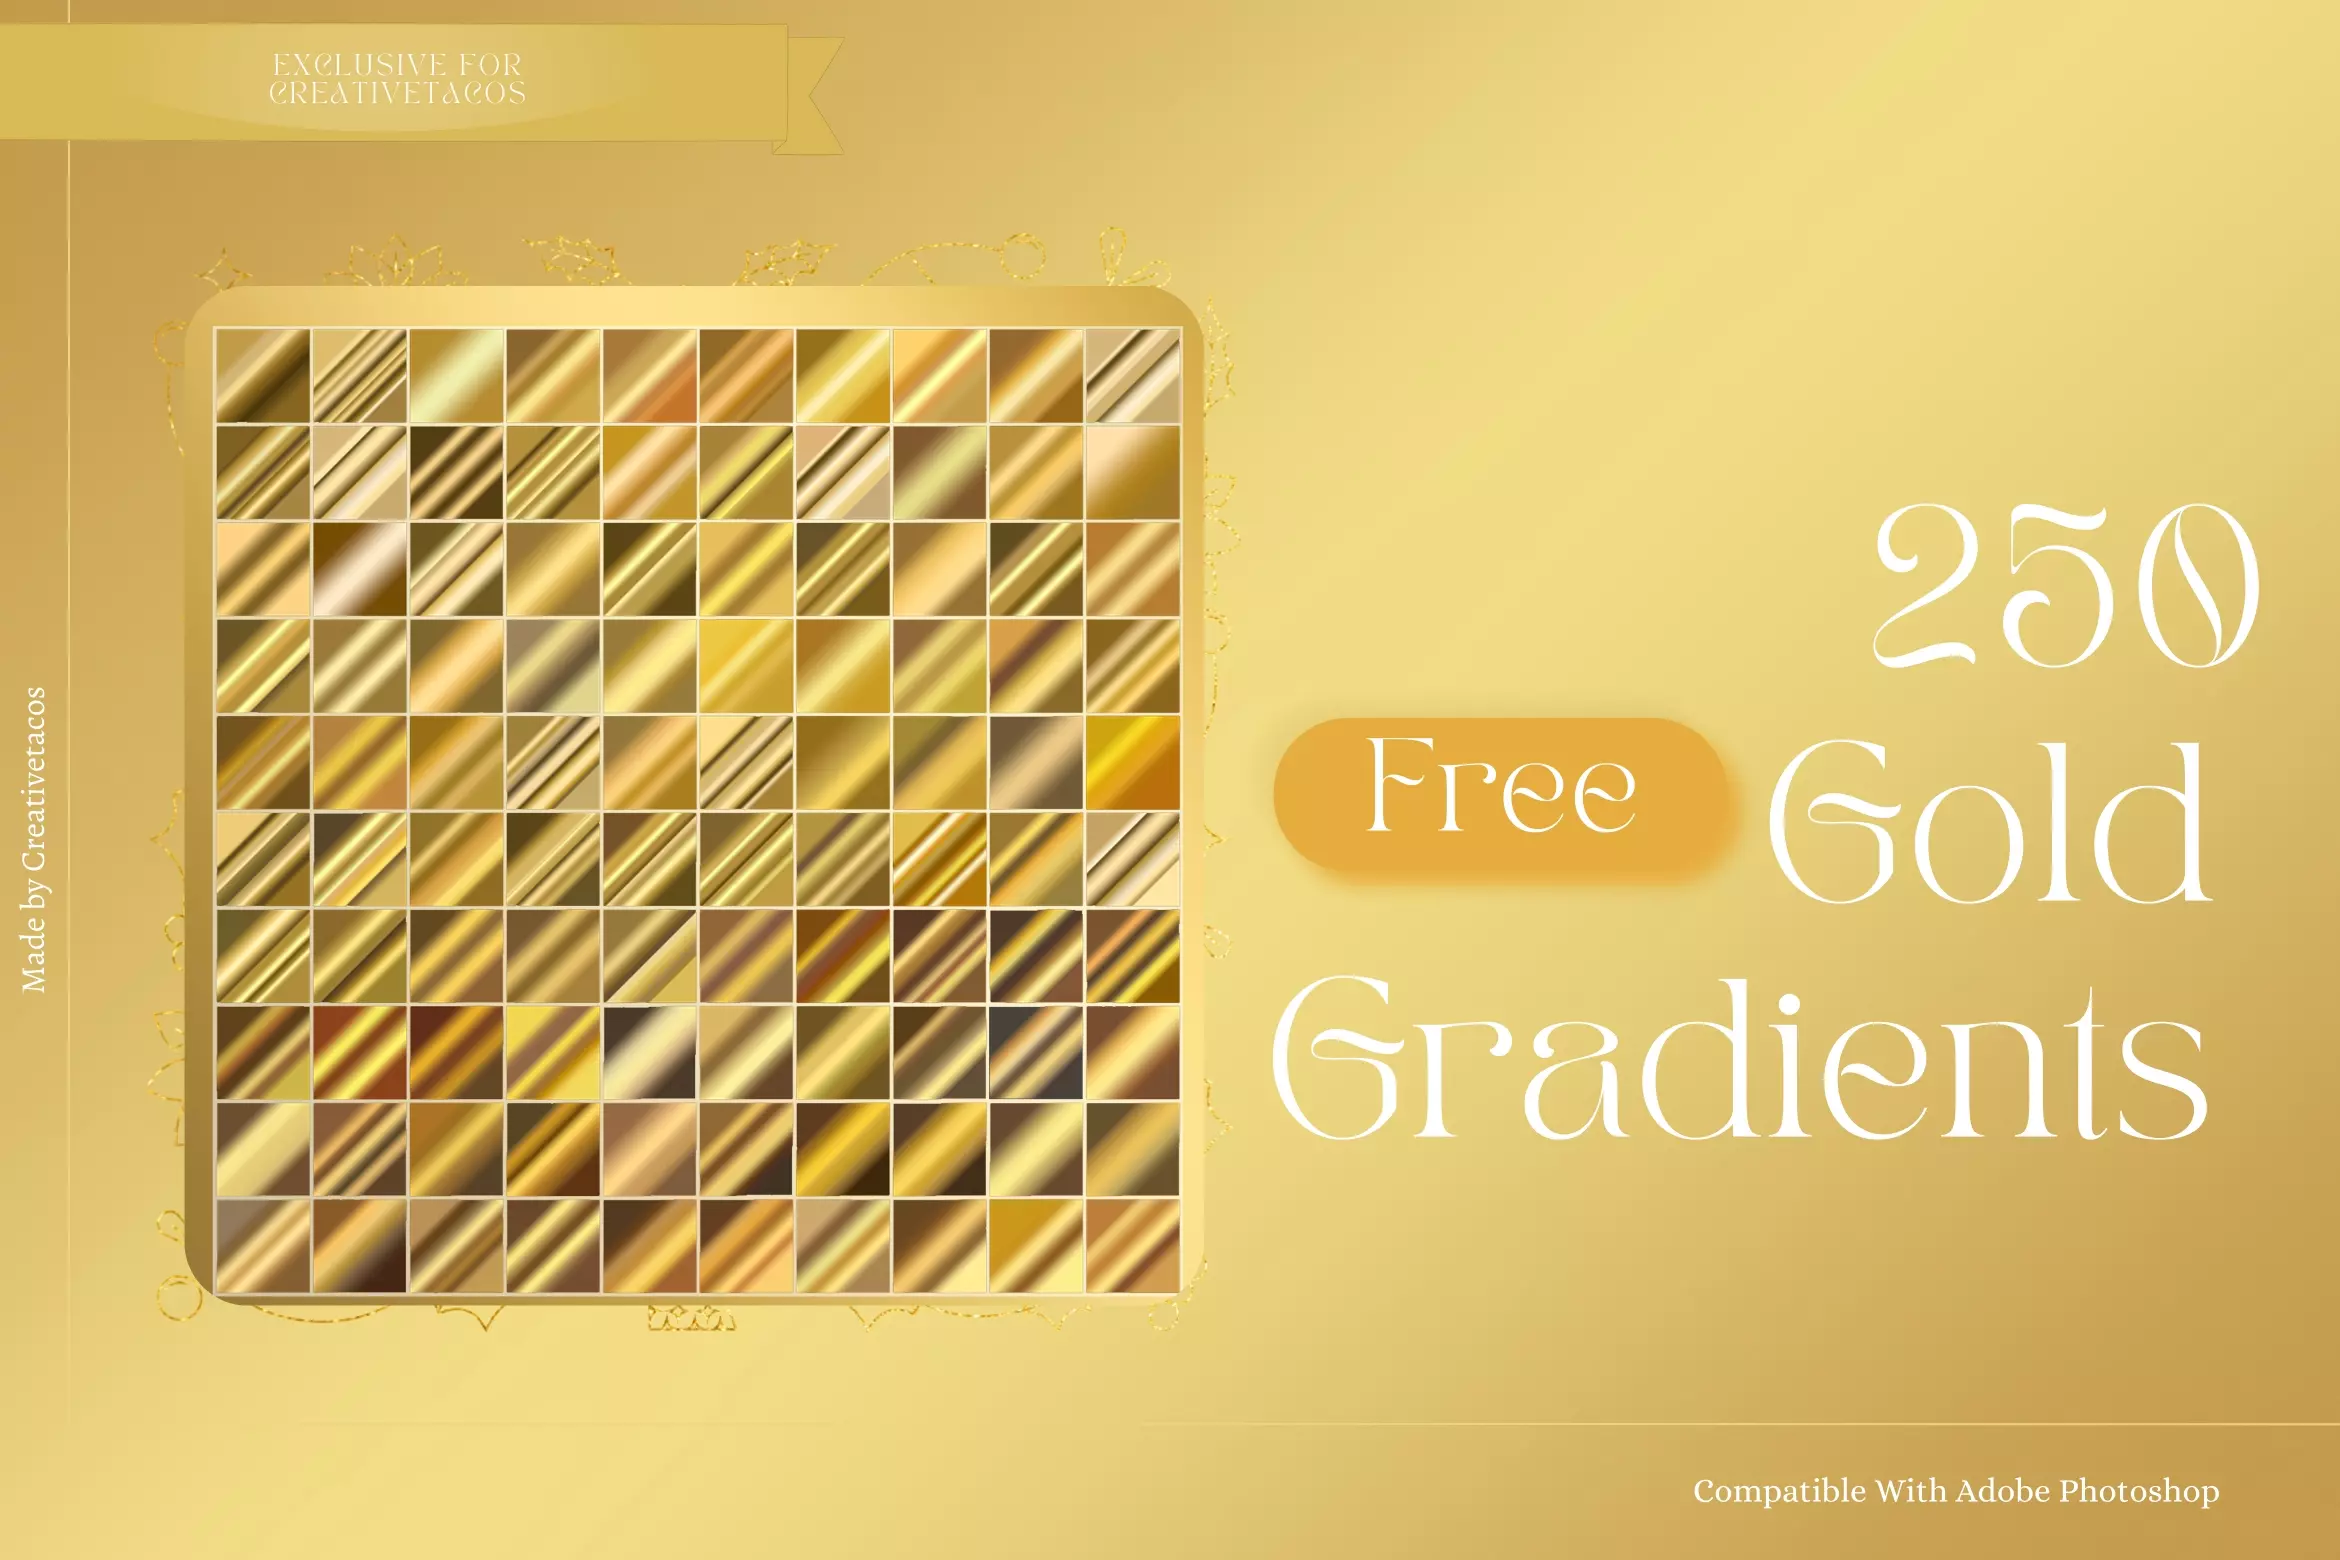 gold gradient free download photoshop